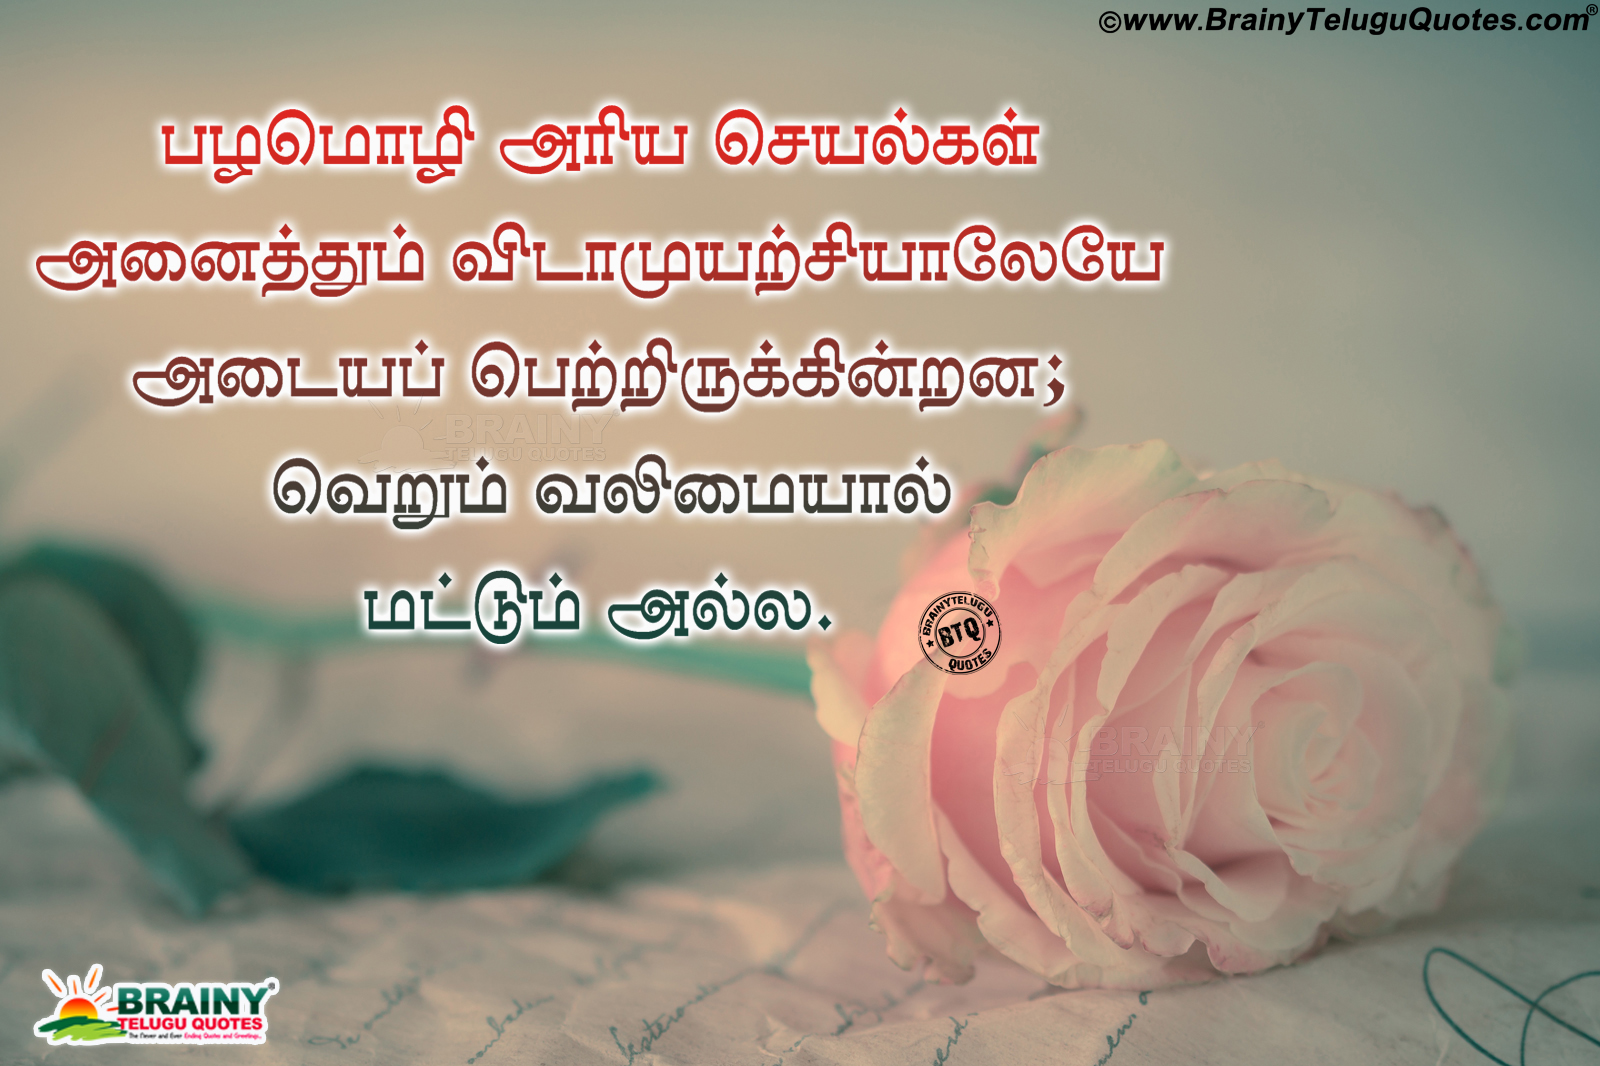  Tamil  Motivational Success  Quotes  Tamil  Quotes  in Tamil  